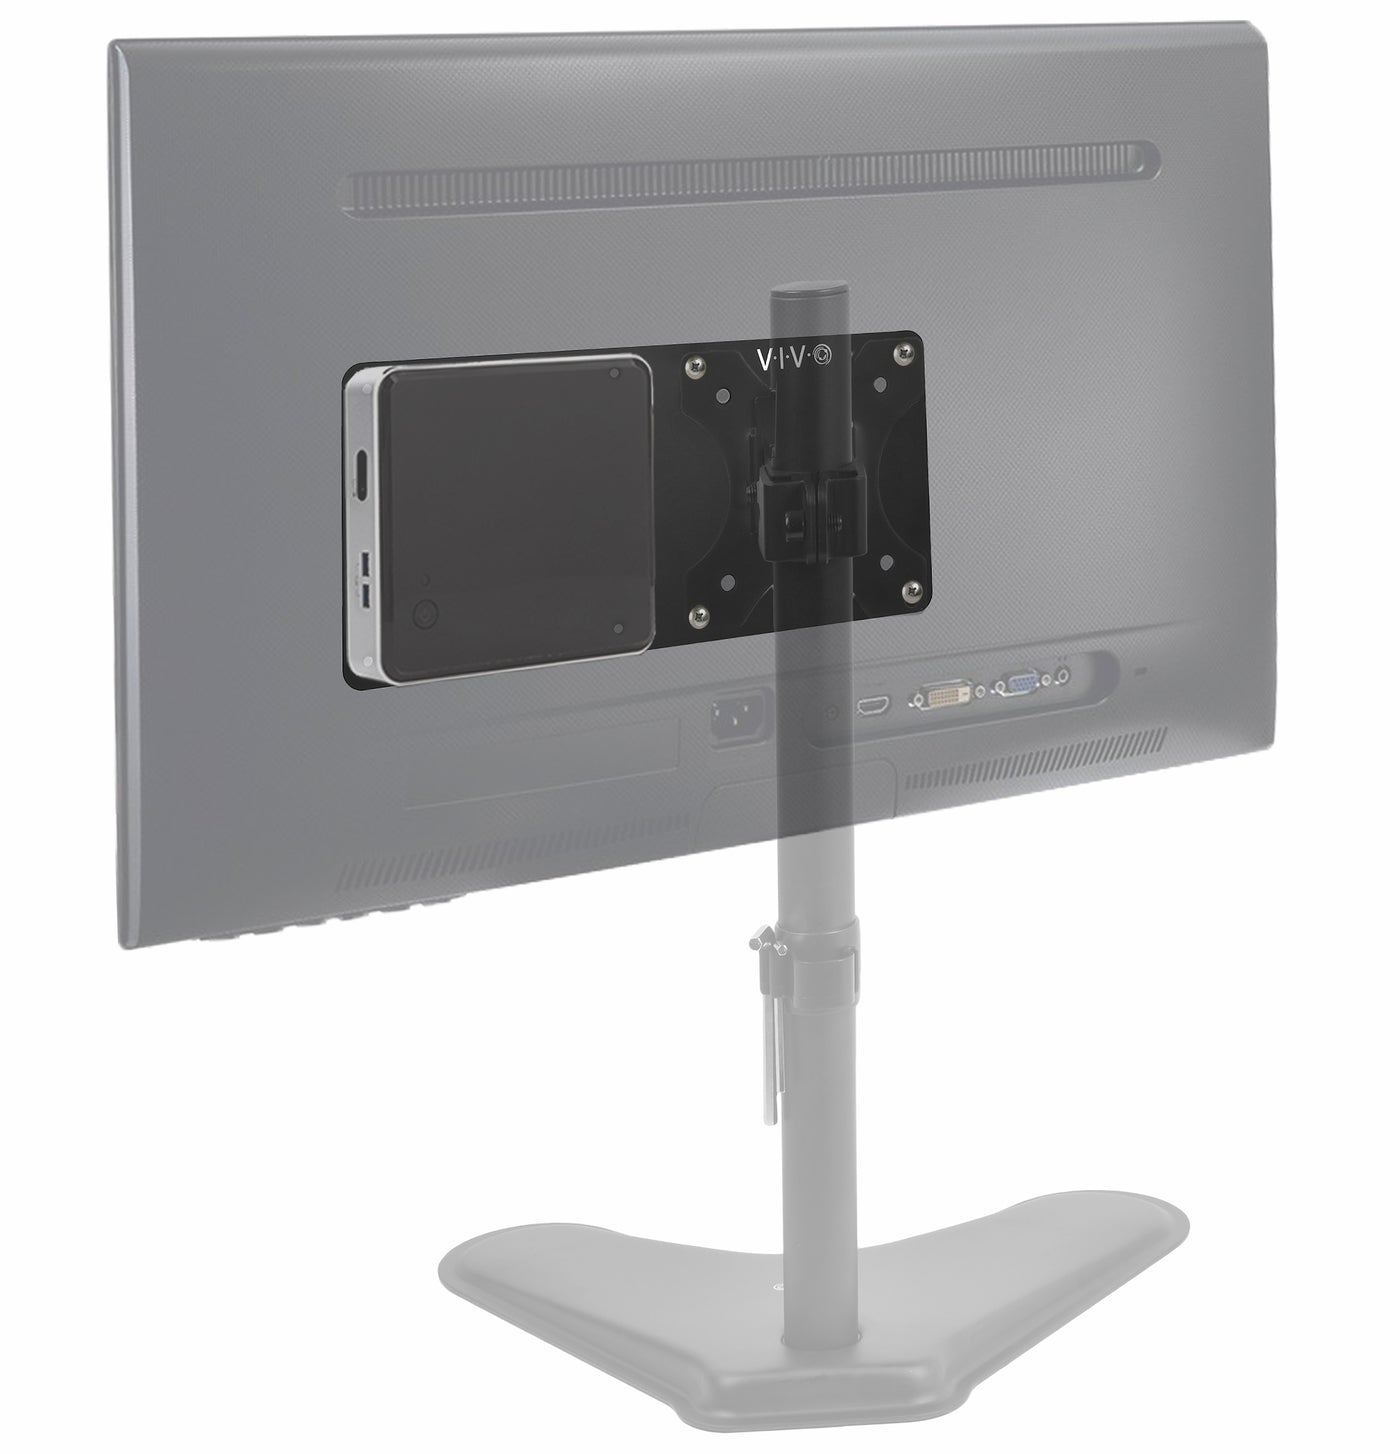 VESA bracket plate on a monitor mount pole.